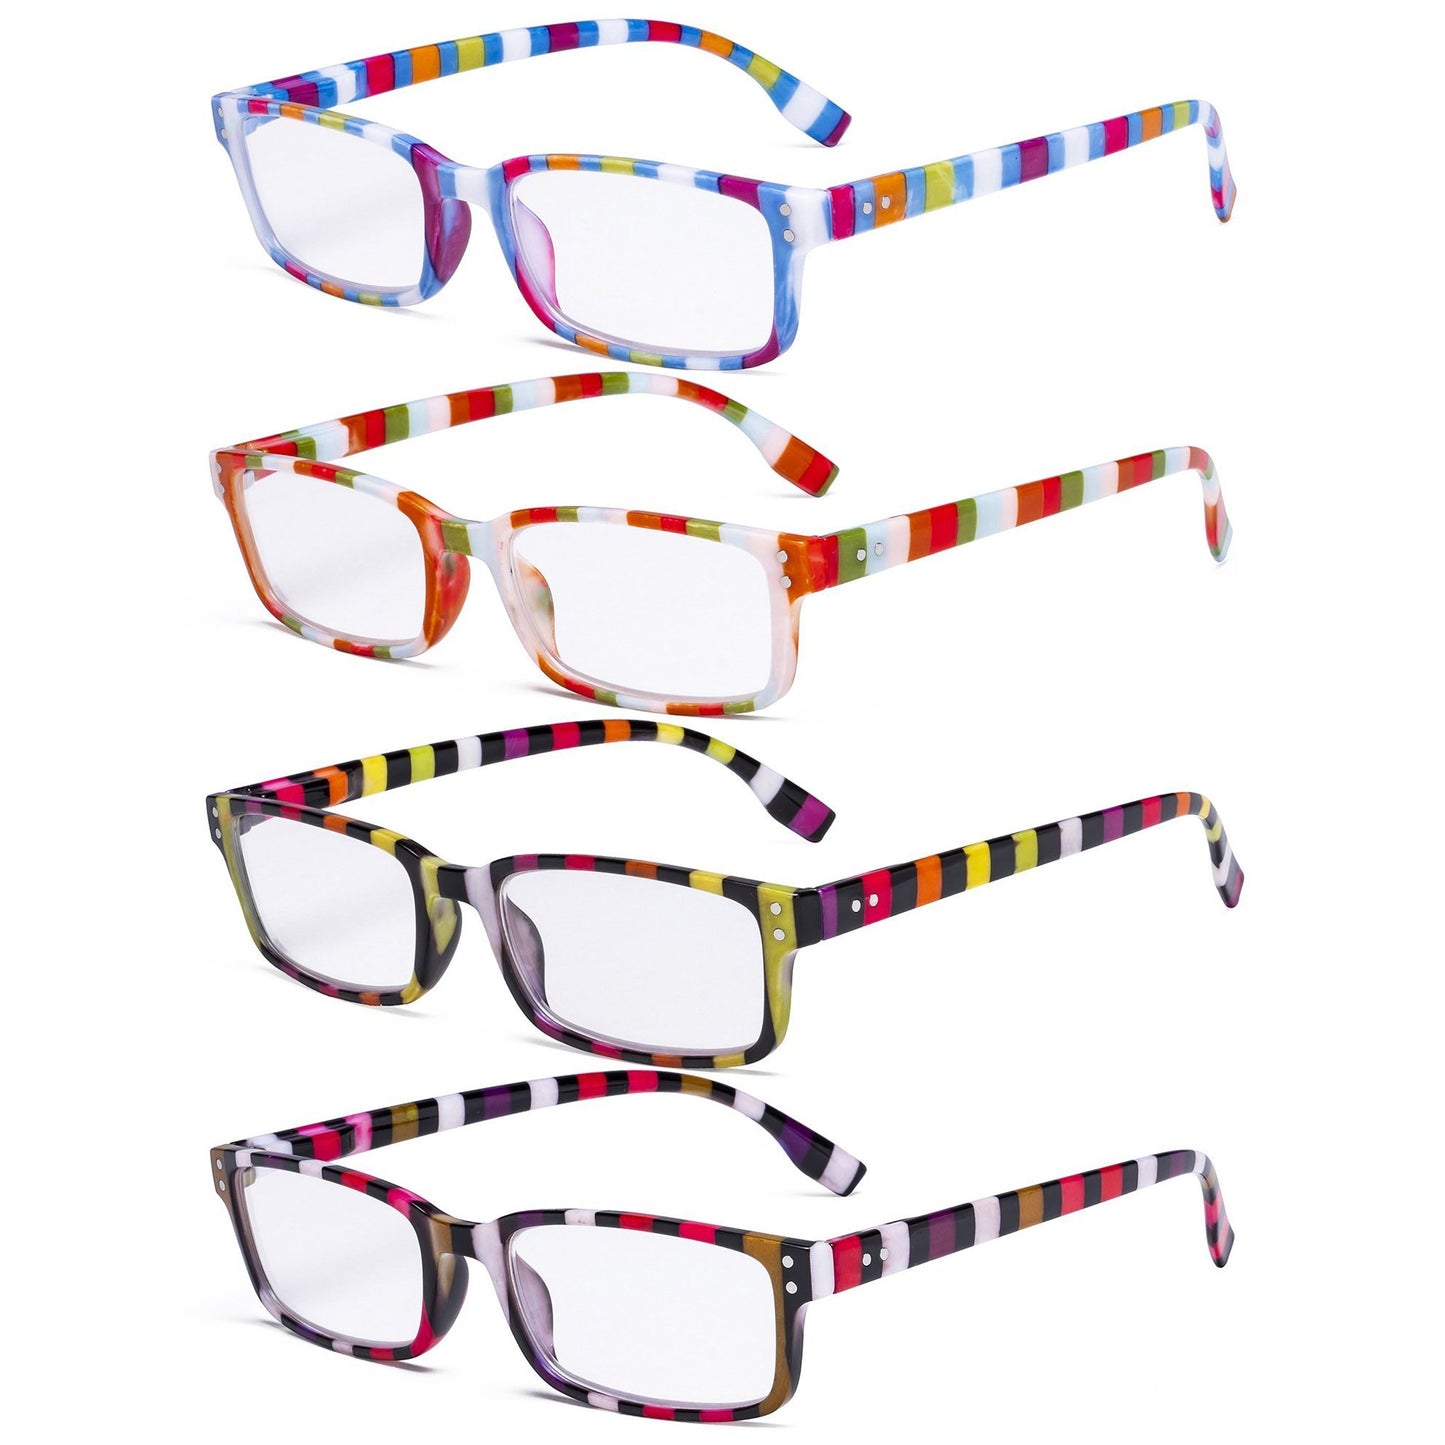 4 Pack Colorful Stripe Design Reading Glasses Women R097S